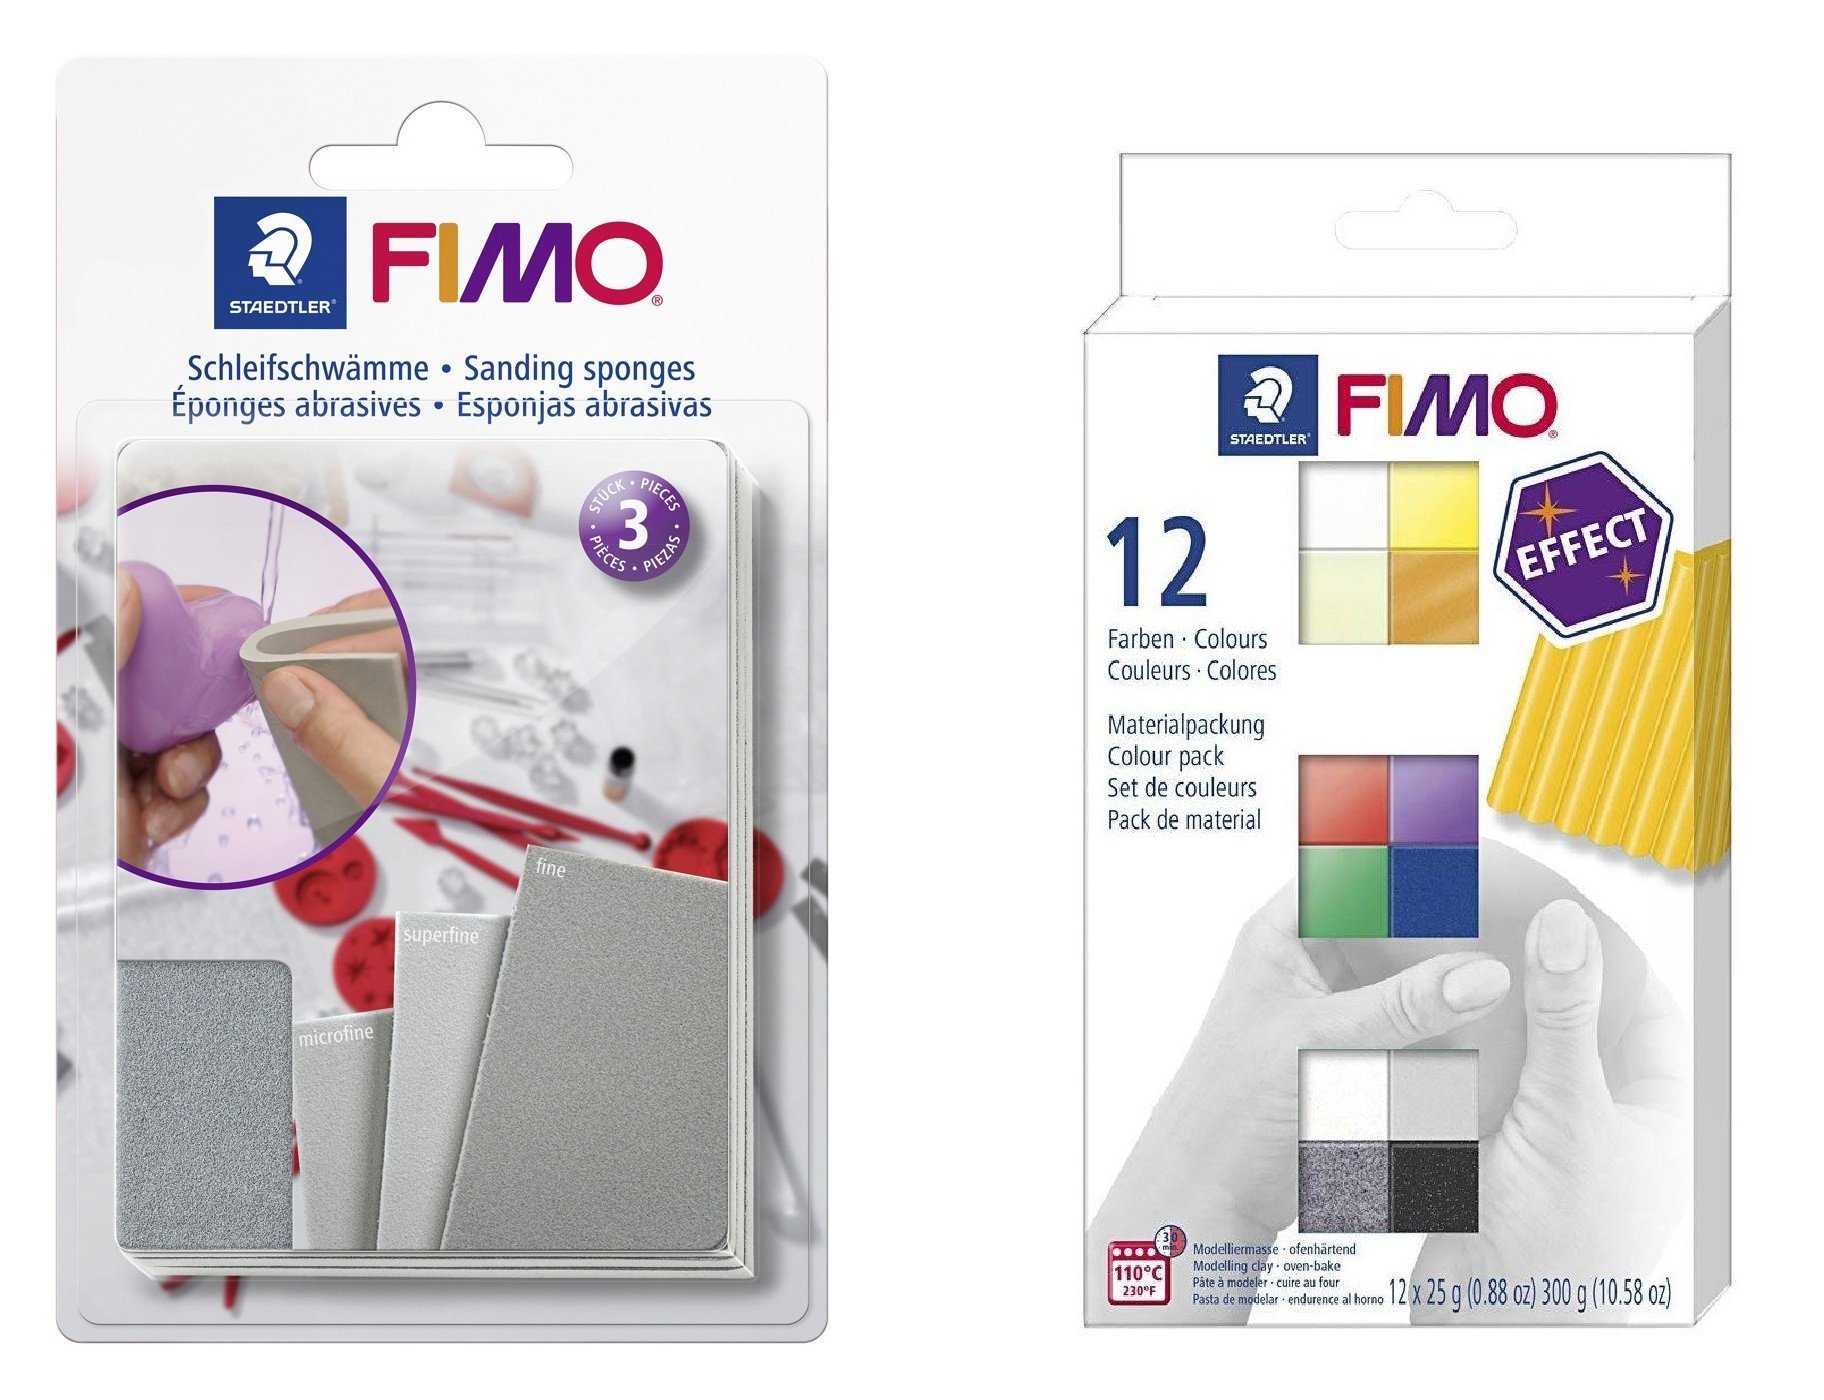 FIMO - Sanding and polishing set&Effect 12 Colours - Leker